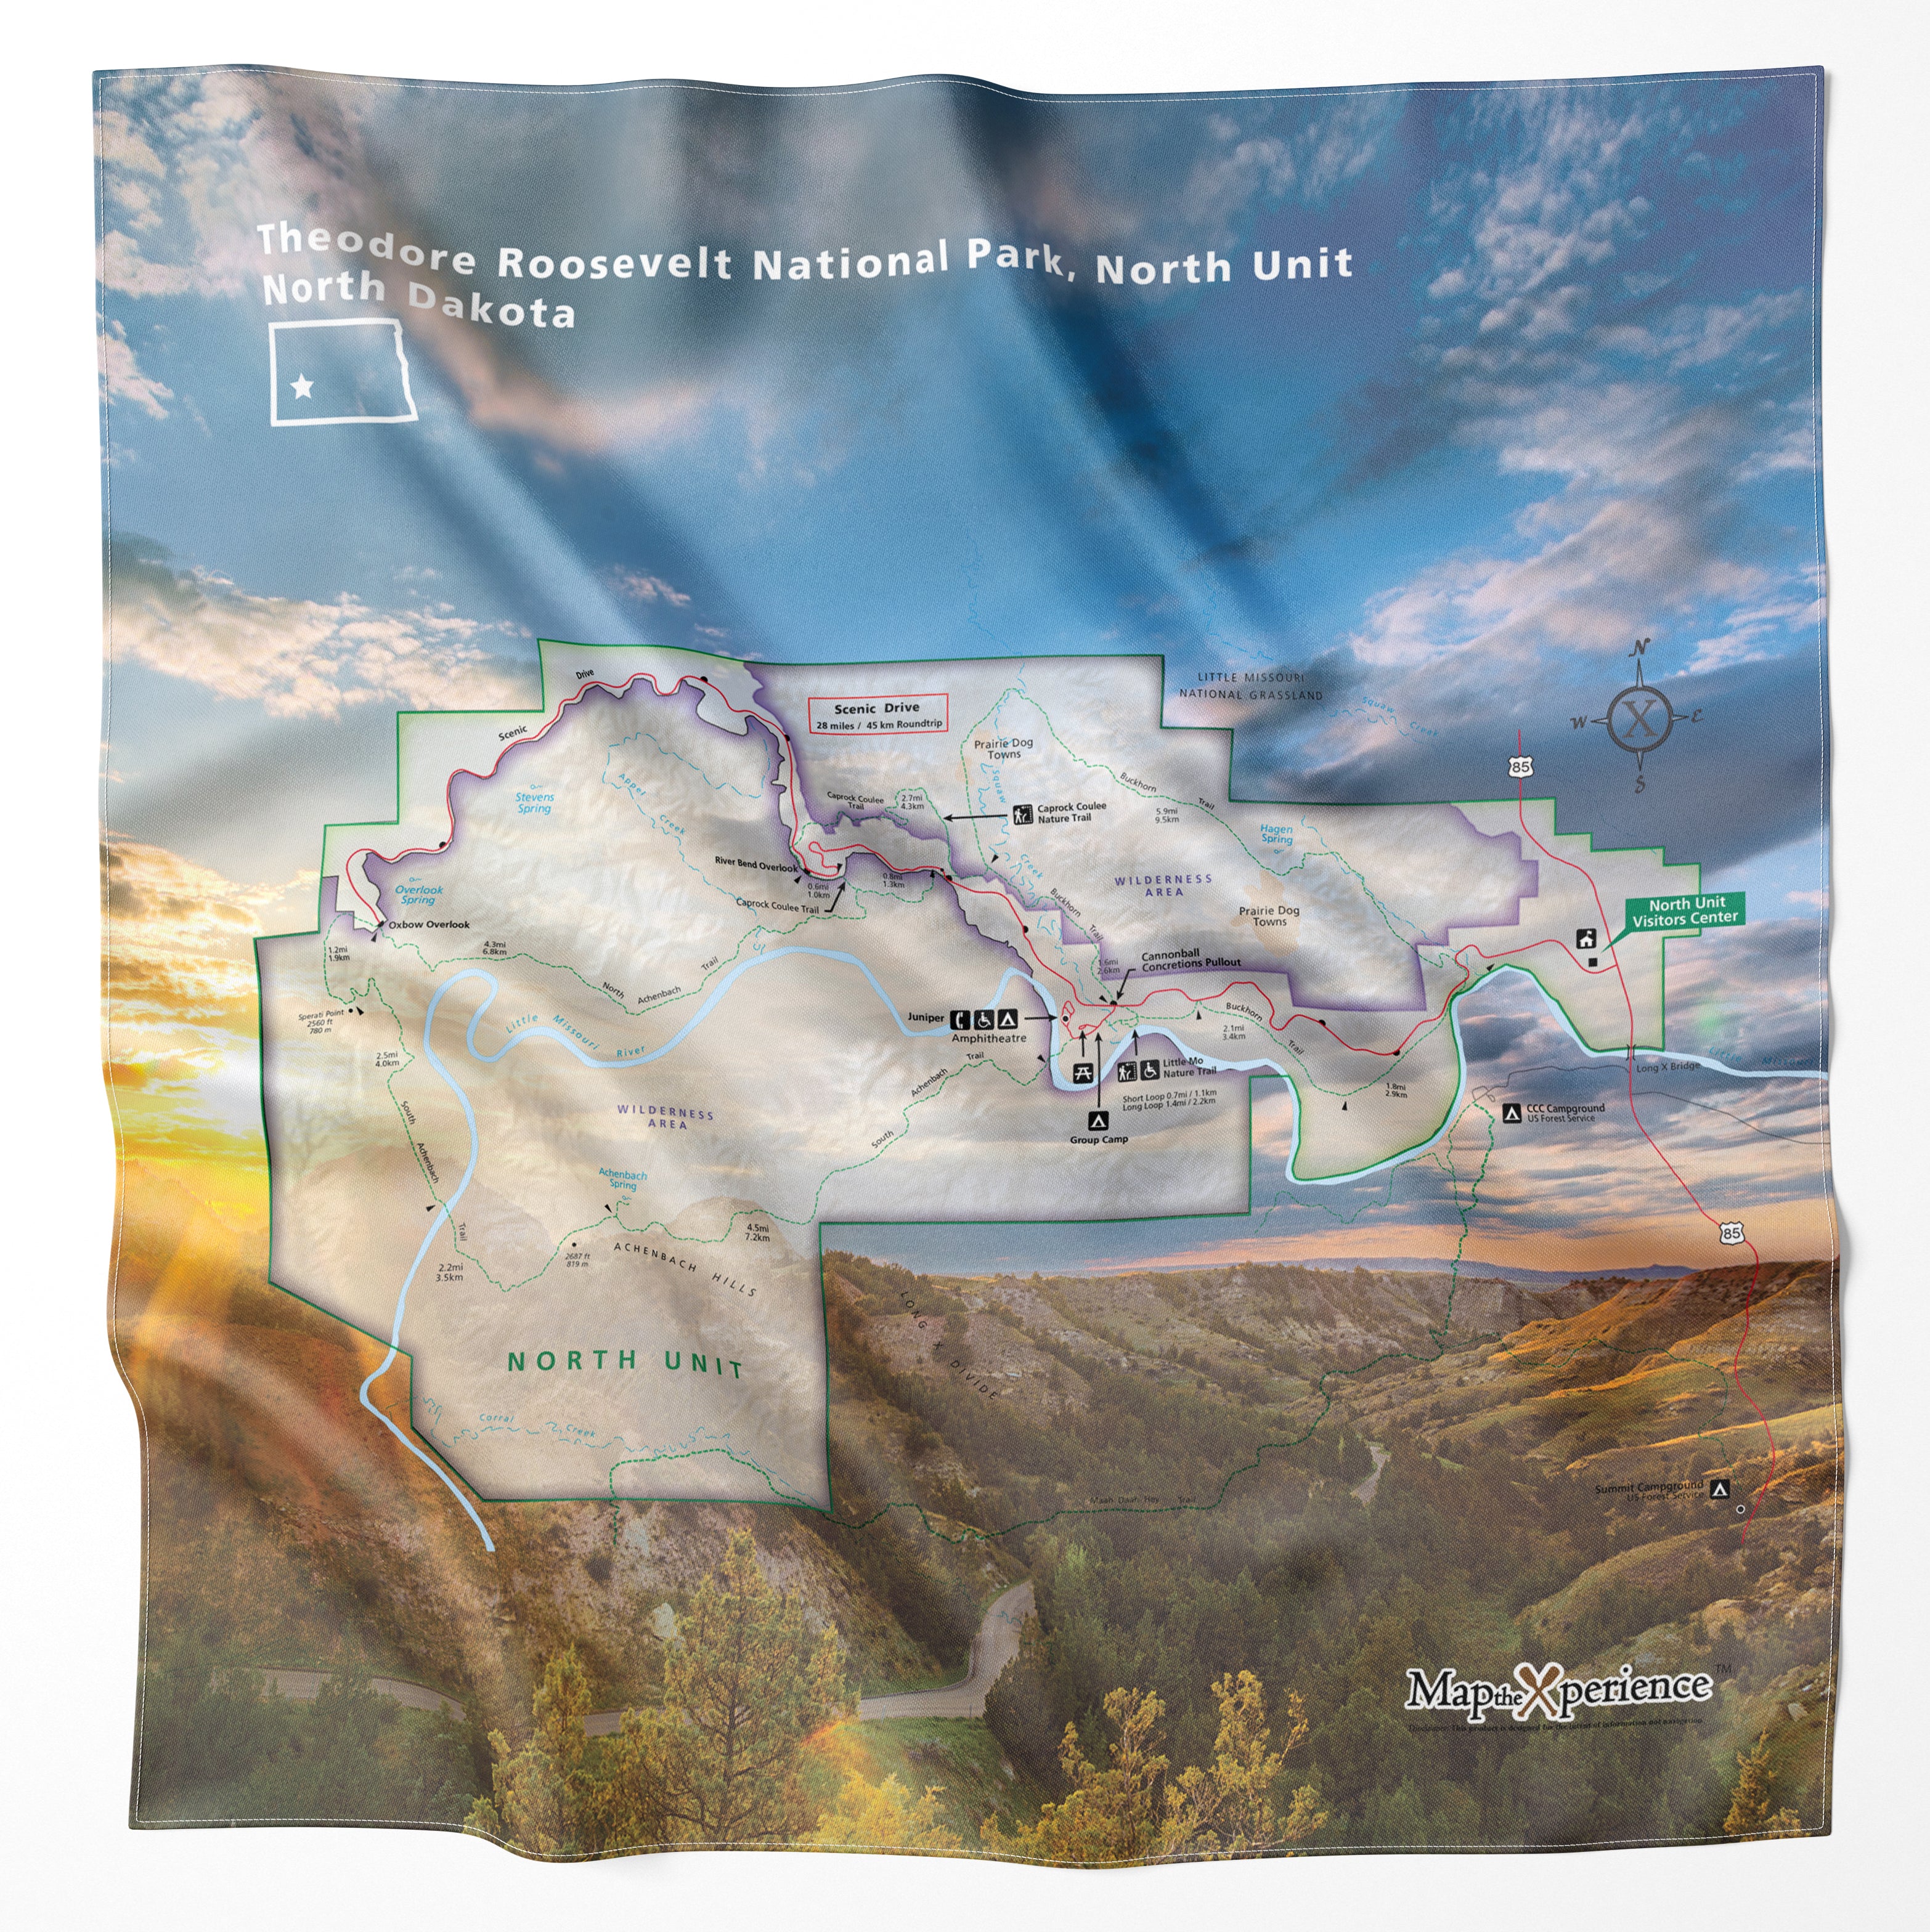 Theodore Roosevelt National Park Handy Map Bandana